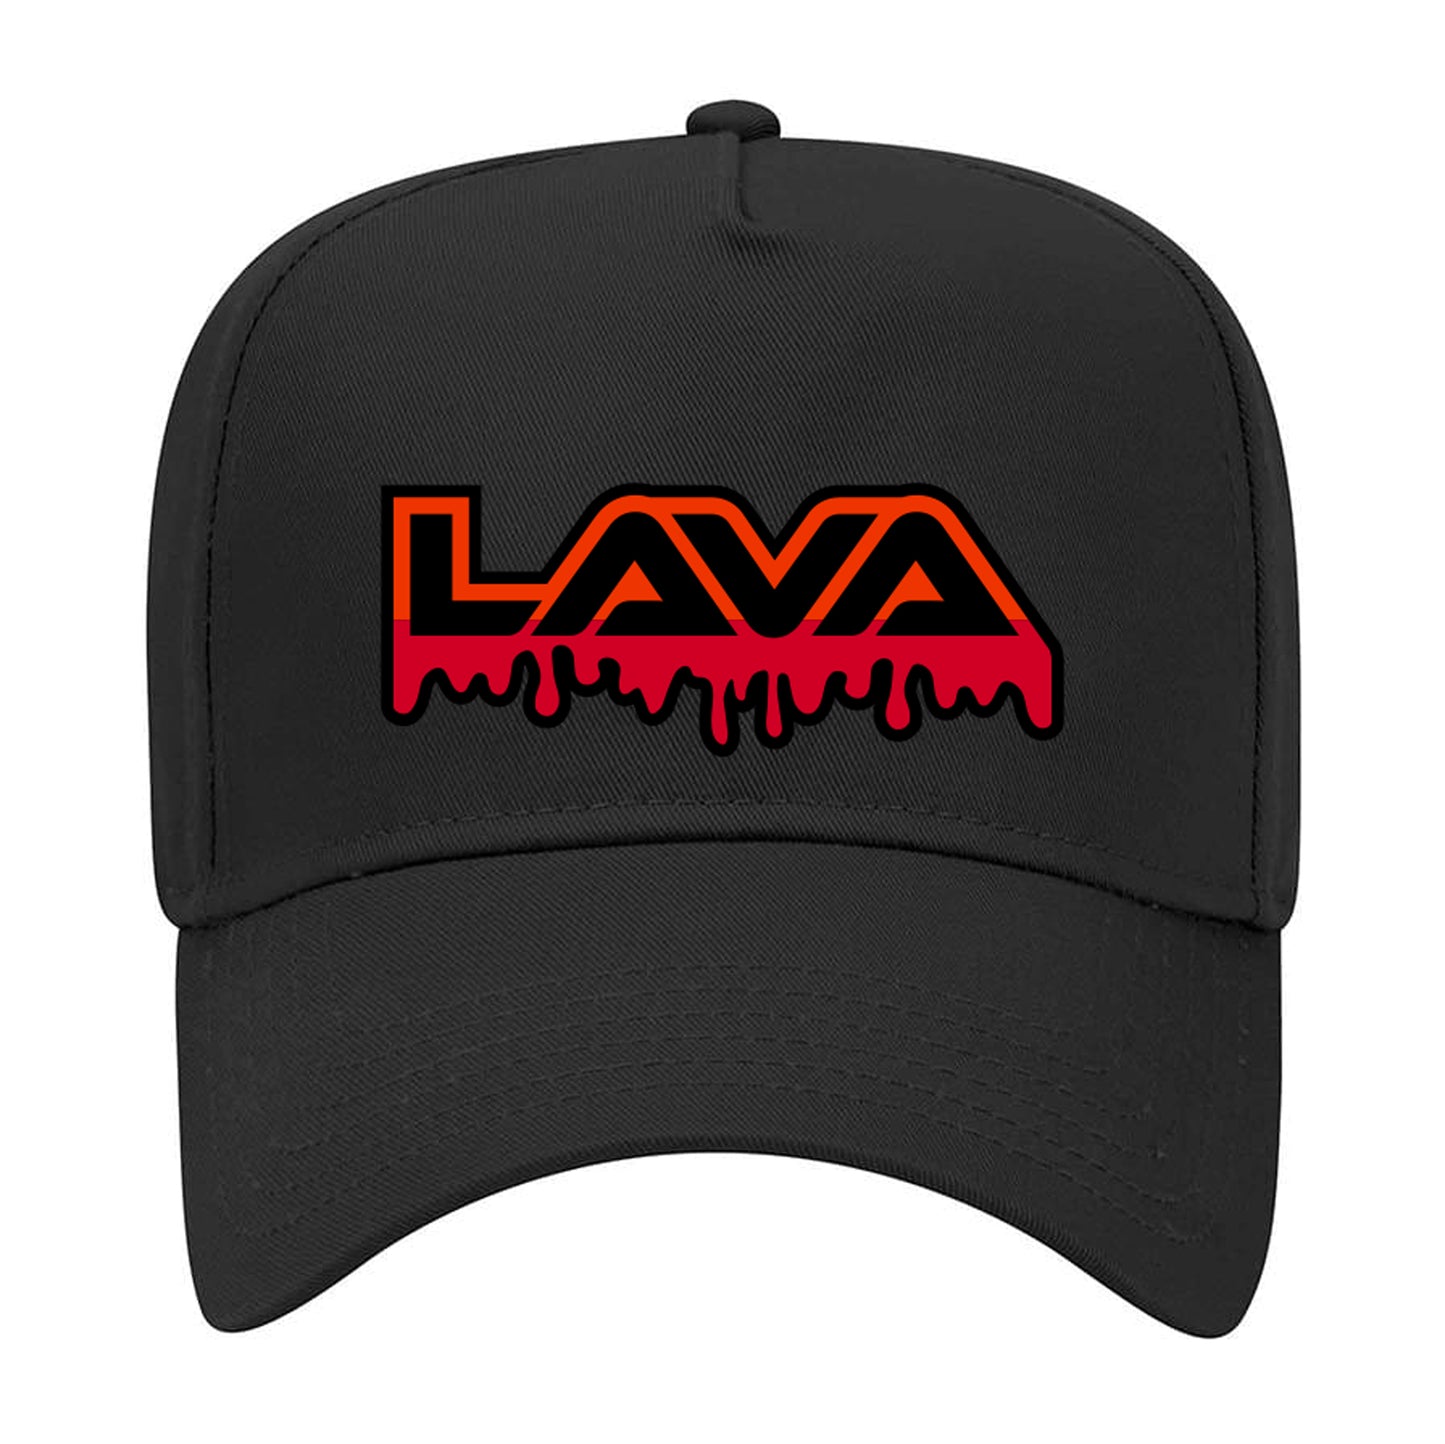 LAVA - Team Hat - Black